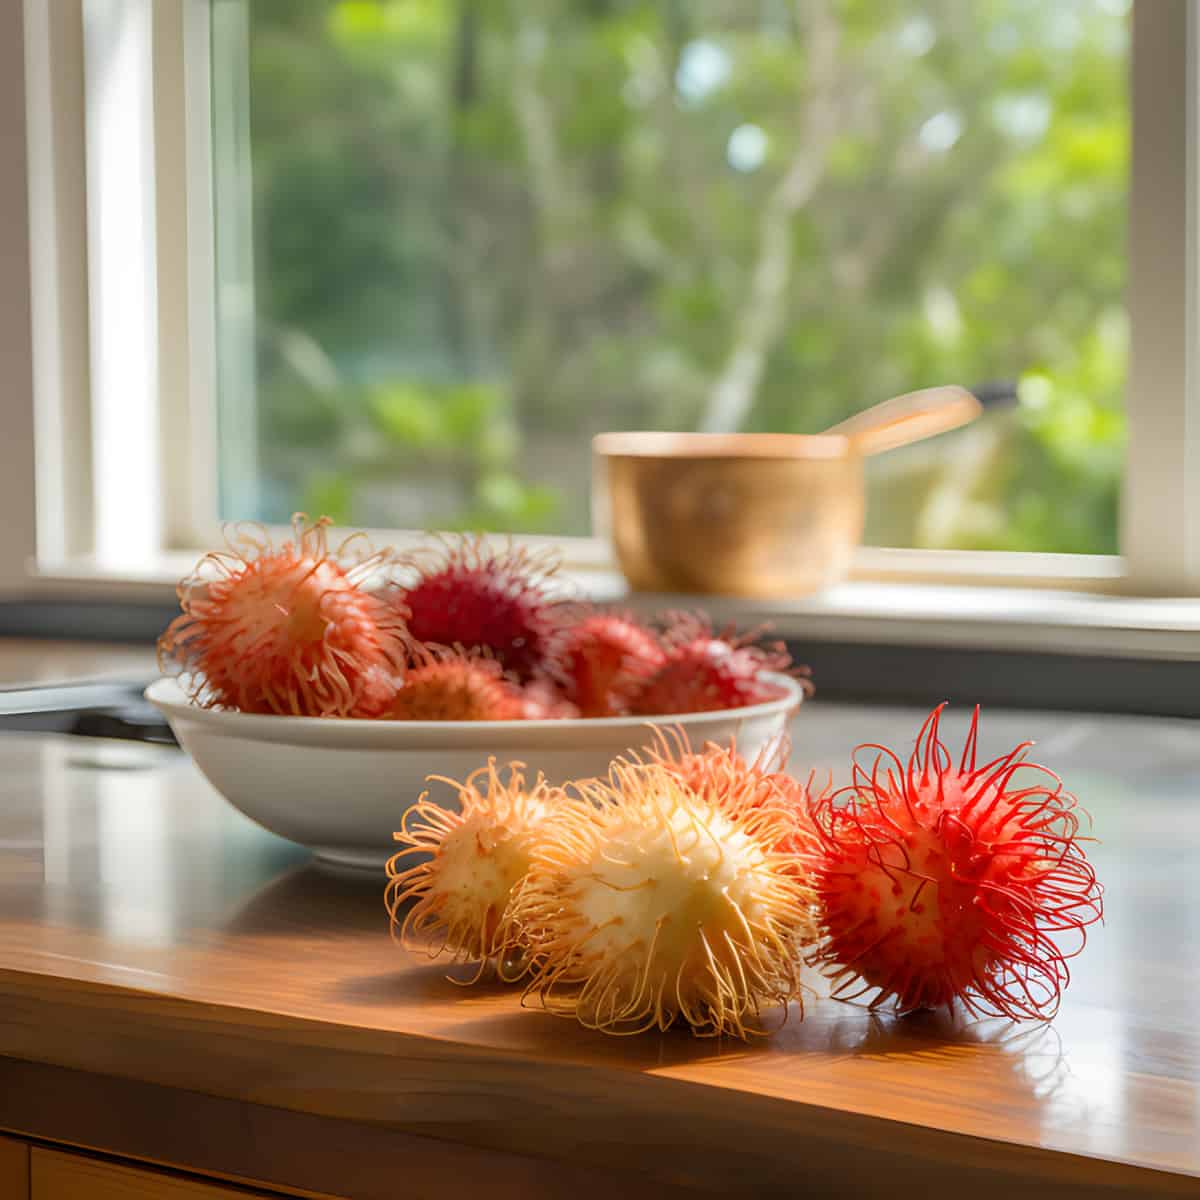 Rambutan on a kitchen counter